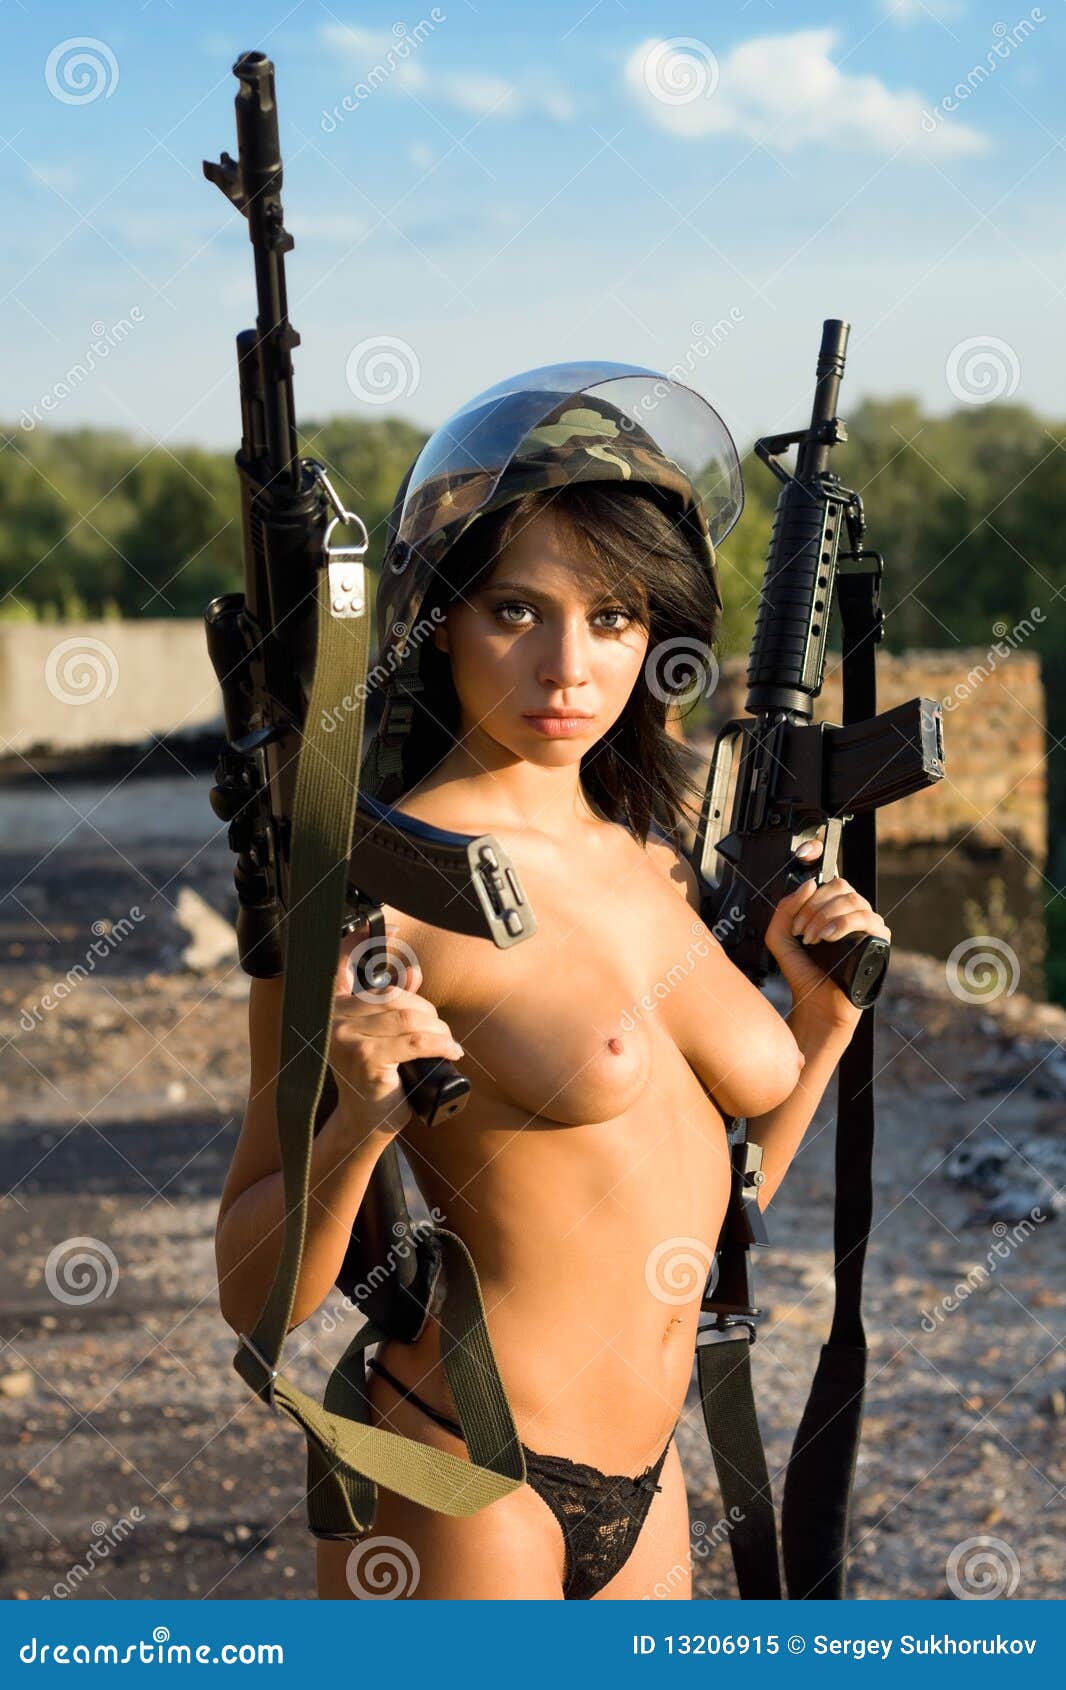 Nude women and guns